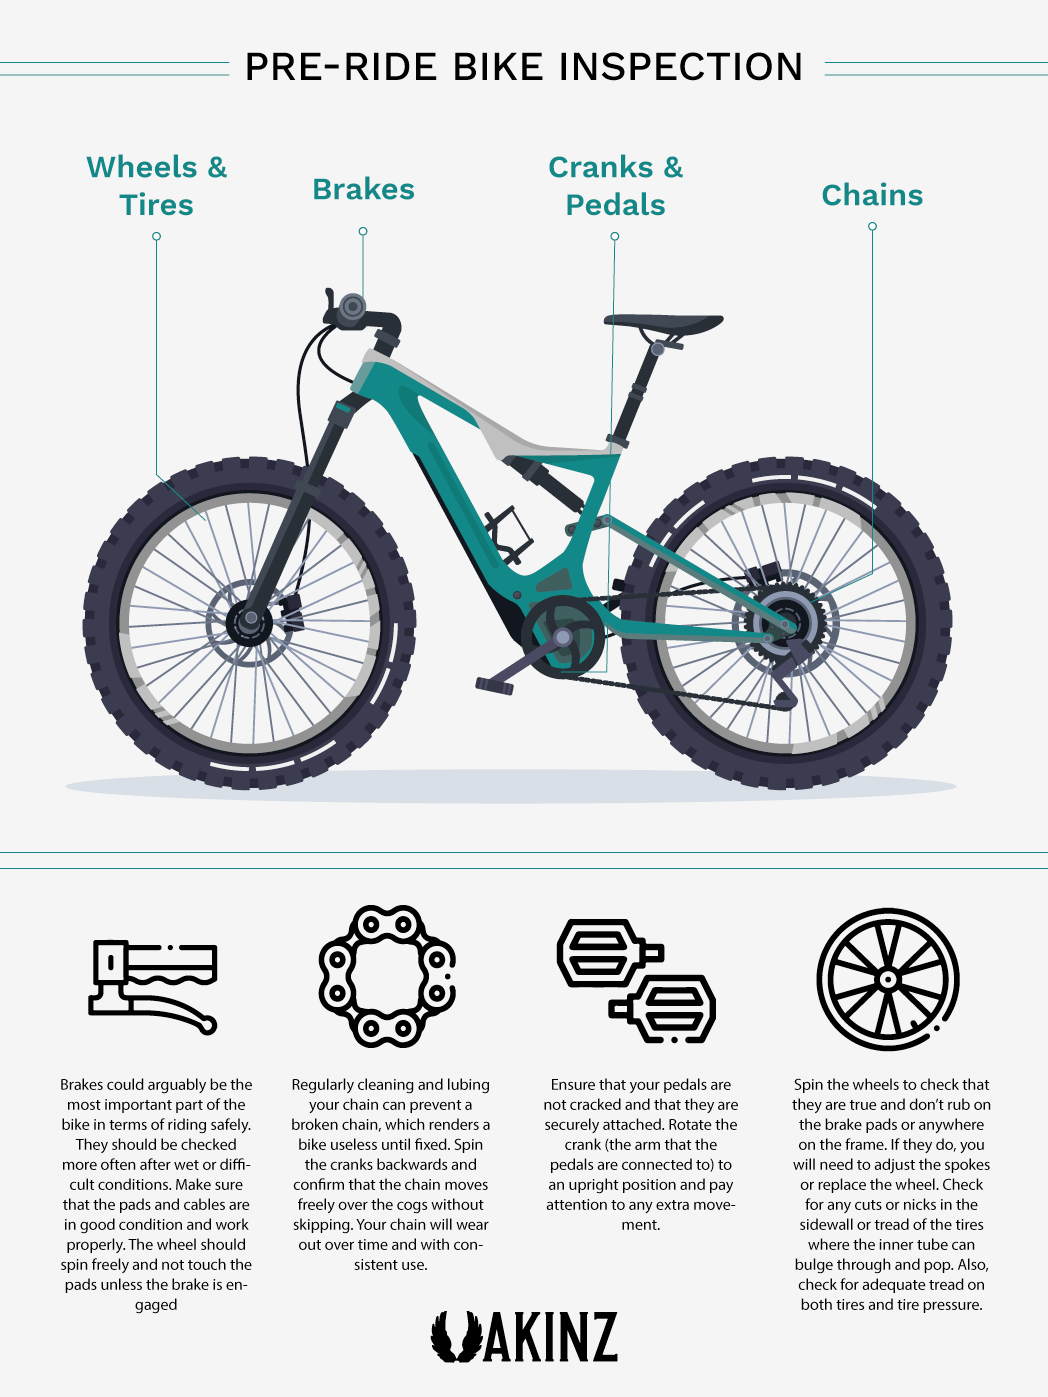 Pre-ride Bike Inspection List Infographic 